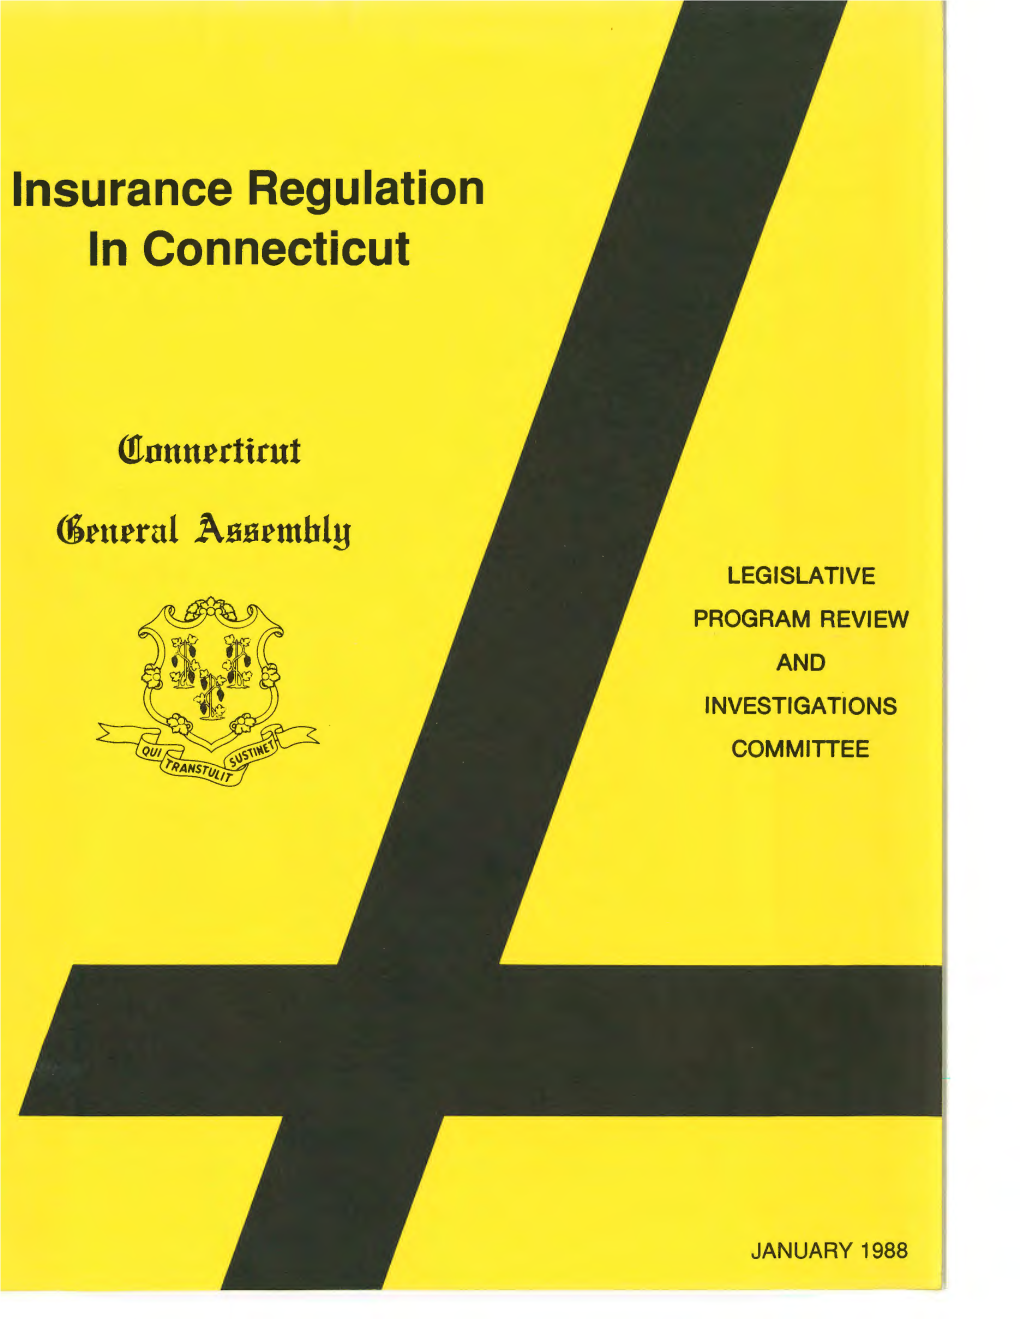 Insurance Regulation in Connecticut